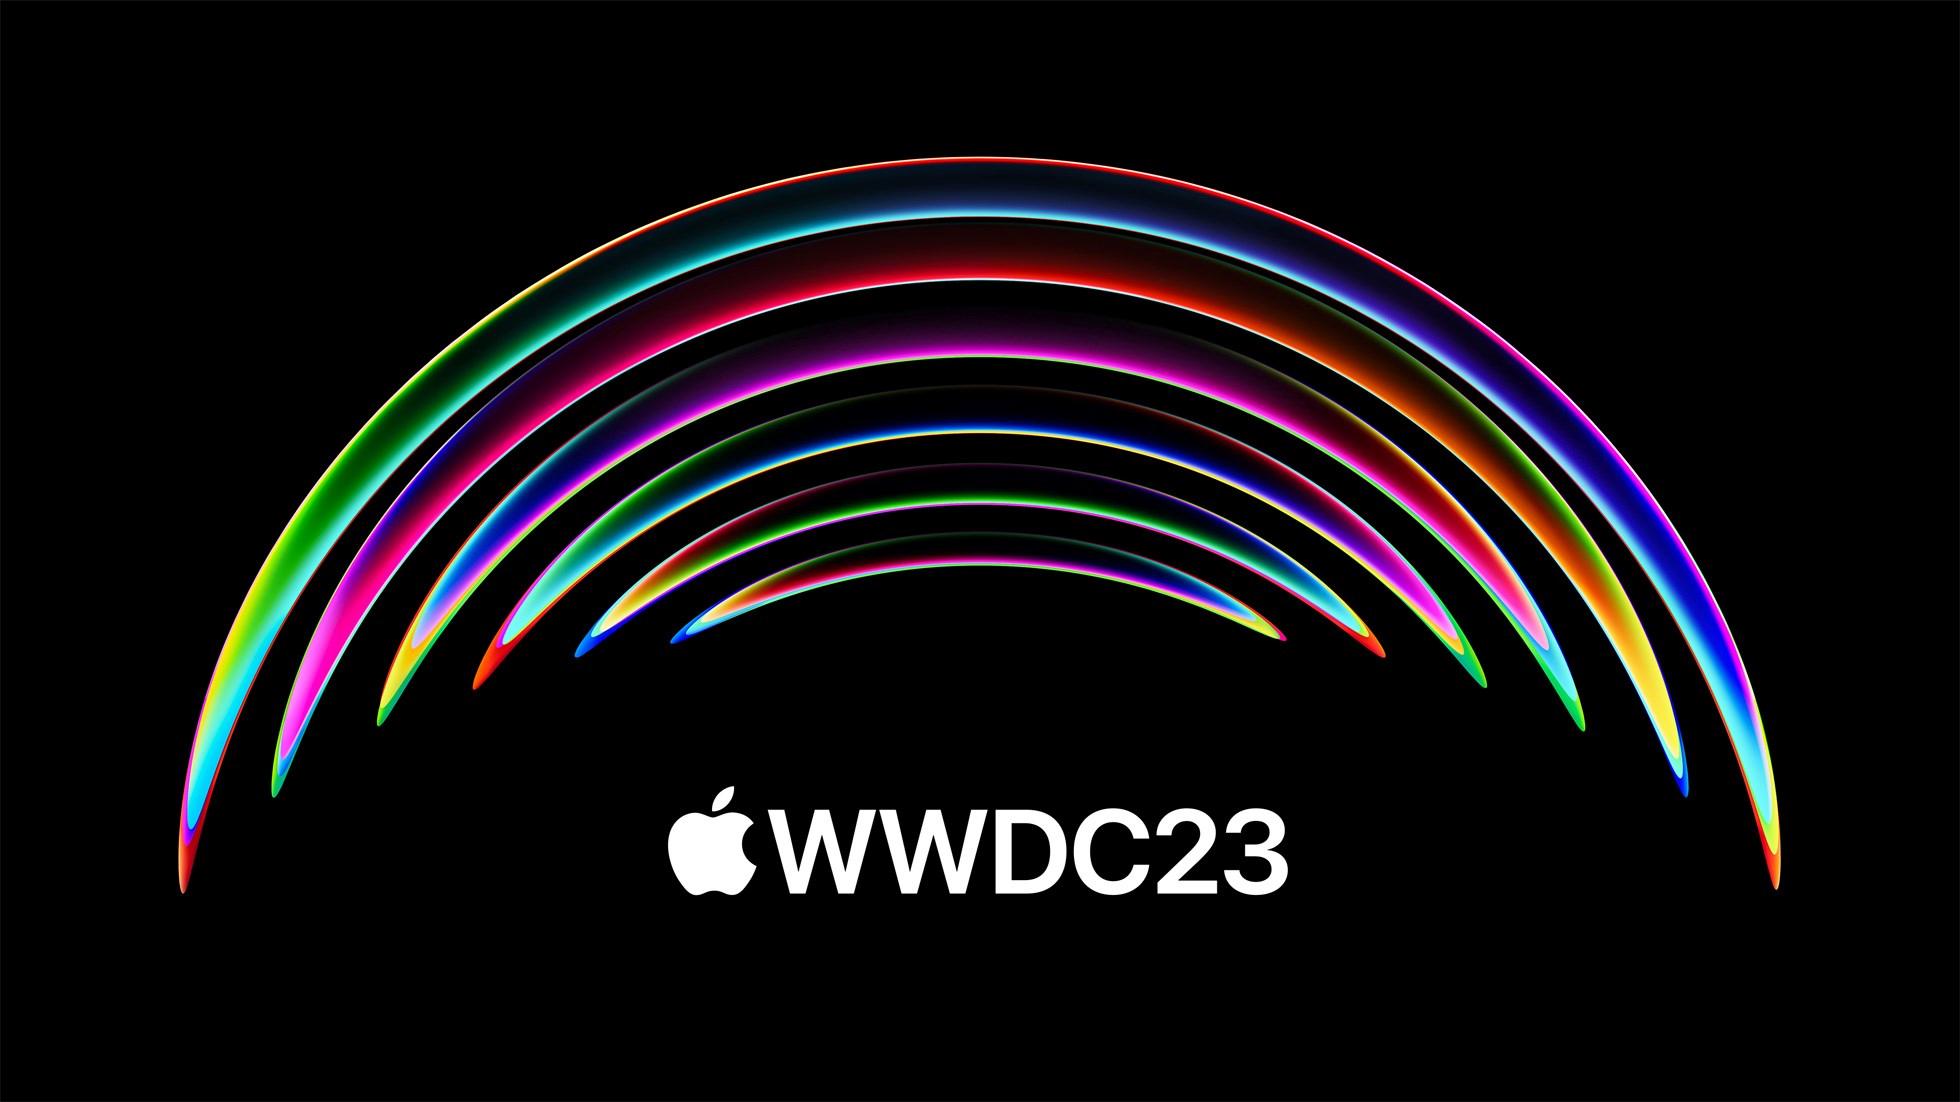 Apple shared the WWDC 2023 event schedule TechnoPixel